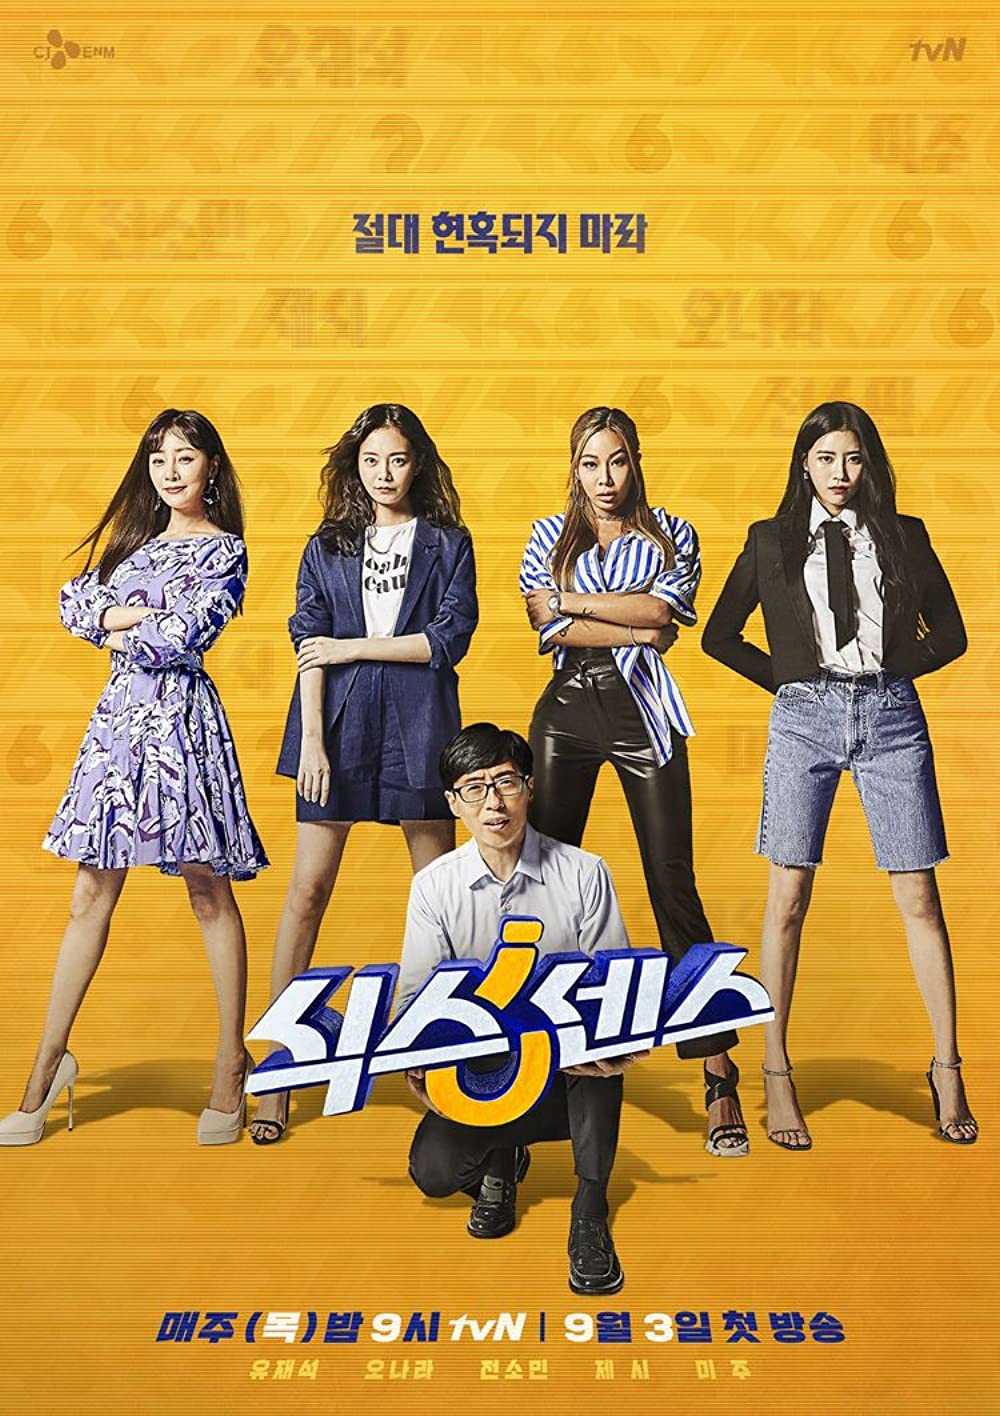 11 Rekomendasi drama Korea di Disney+ Hotstar, thriller hingga romansa